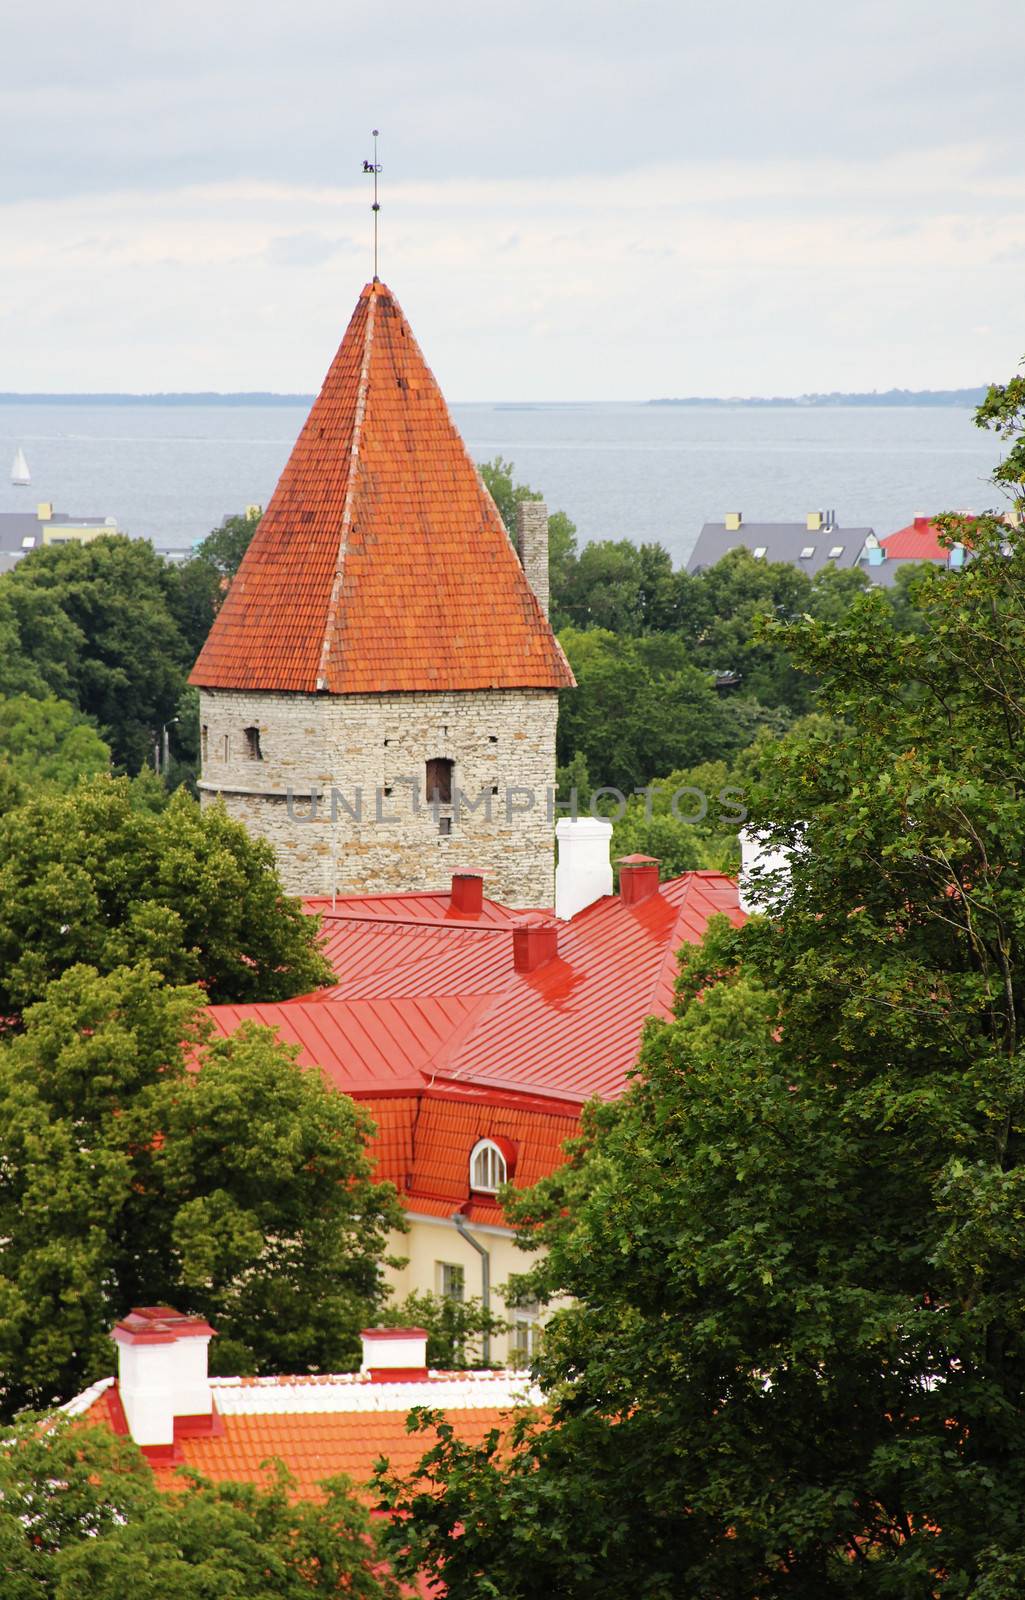 Beautiful towera of old Tallinn in summertime